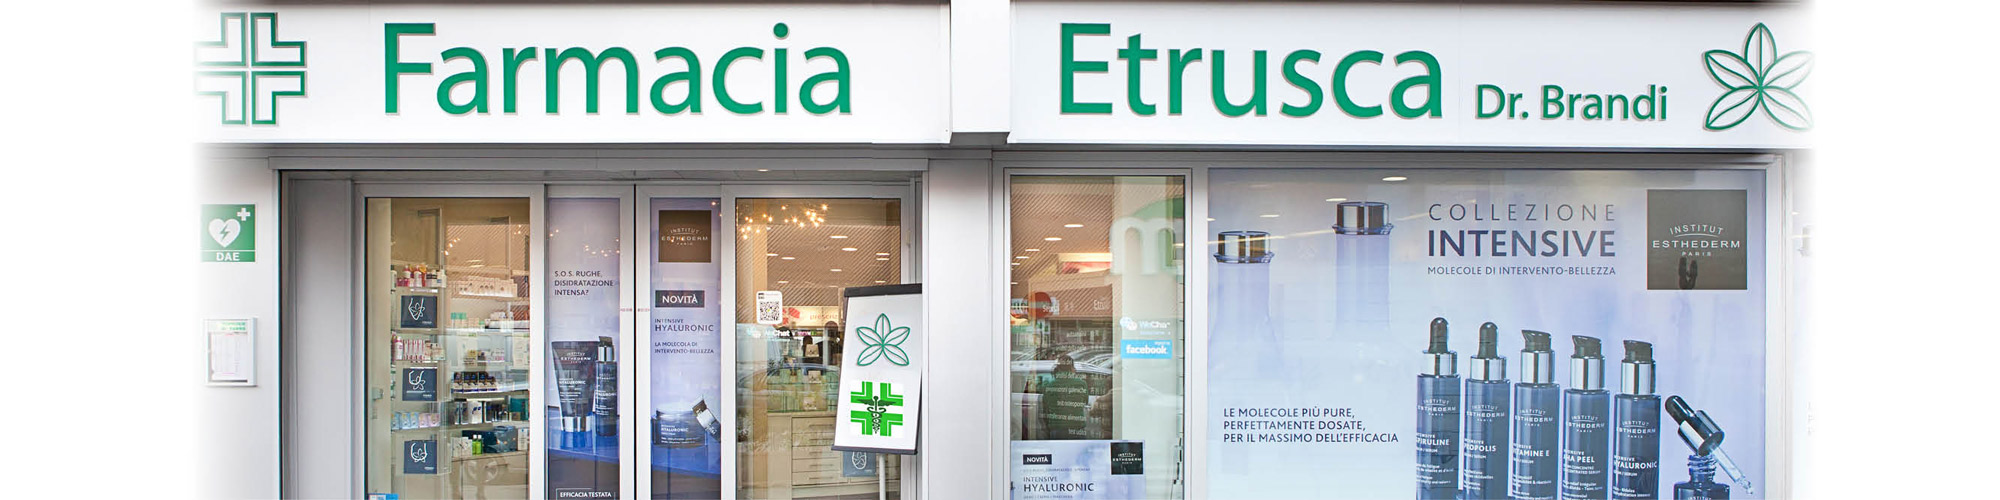 farmacia etrusca